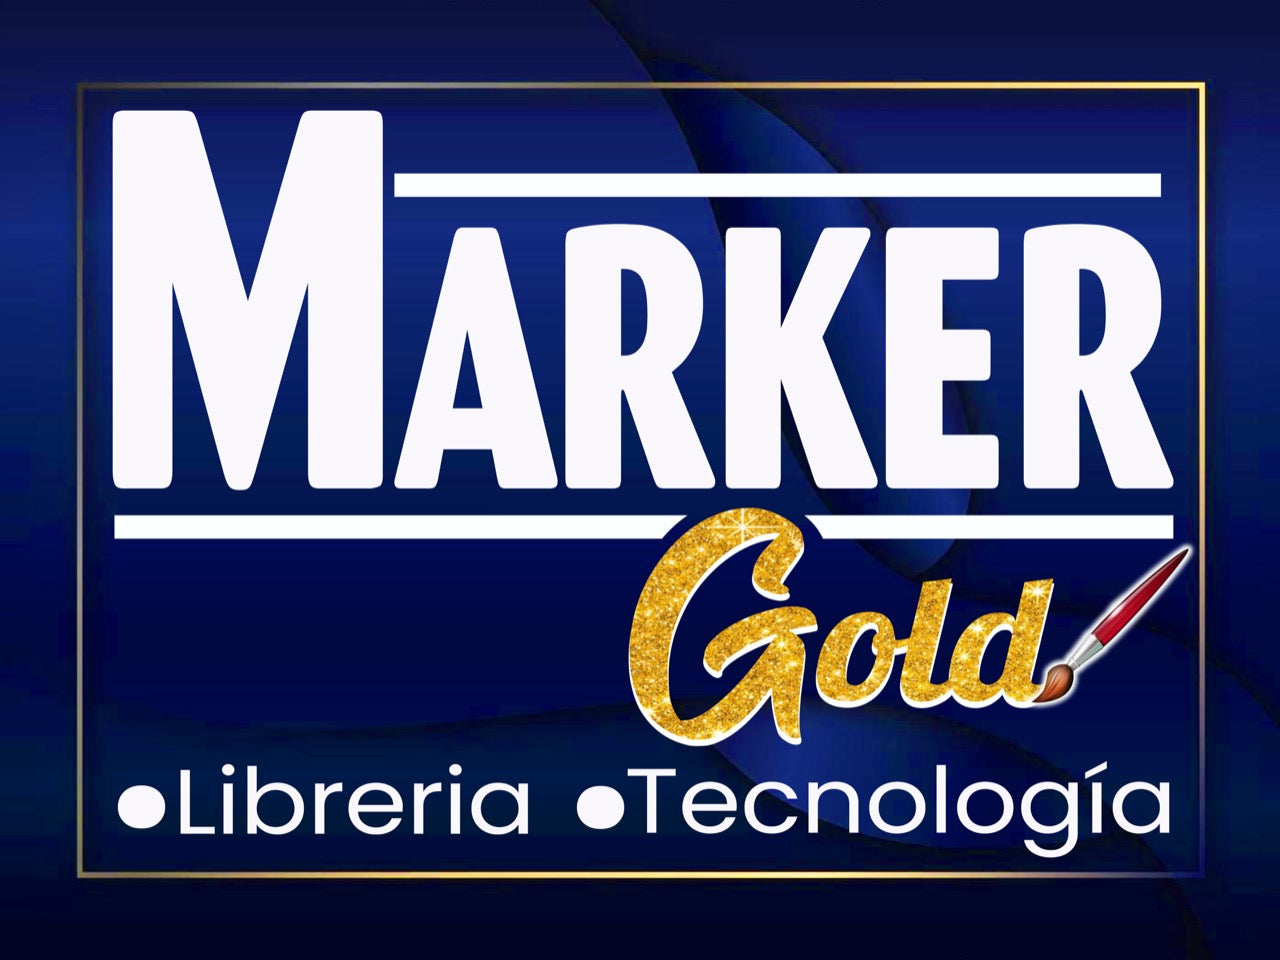 markergold.com,MARKERGOLD.COM,marker gold,MARKER GOLD,libreria,Marker